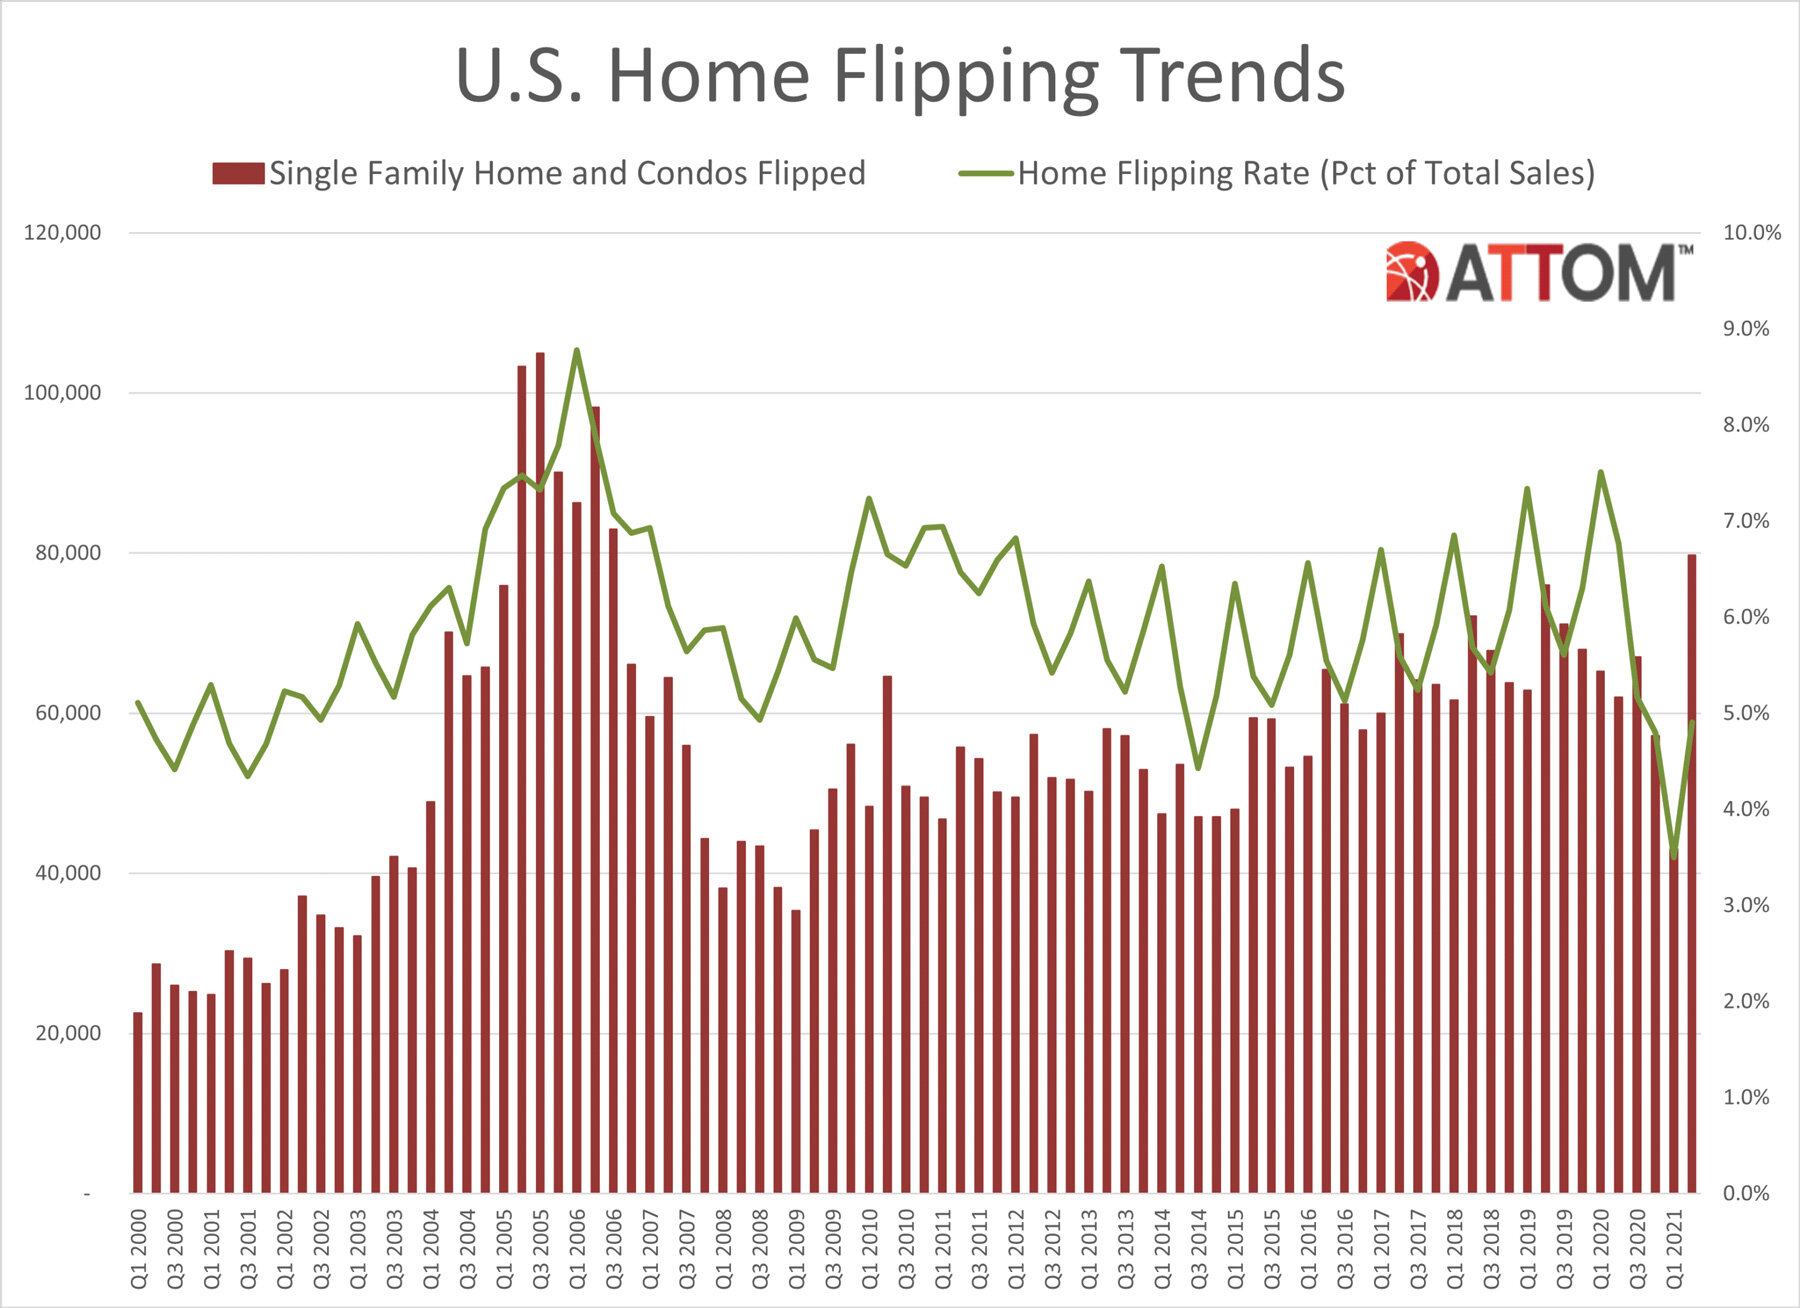 https://www.worldpropertyjournal.com/news-assets/Q2-2021-US-Home-FLipping-Trends.jpg